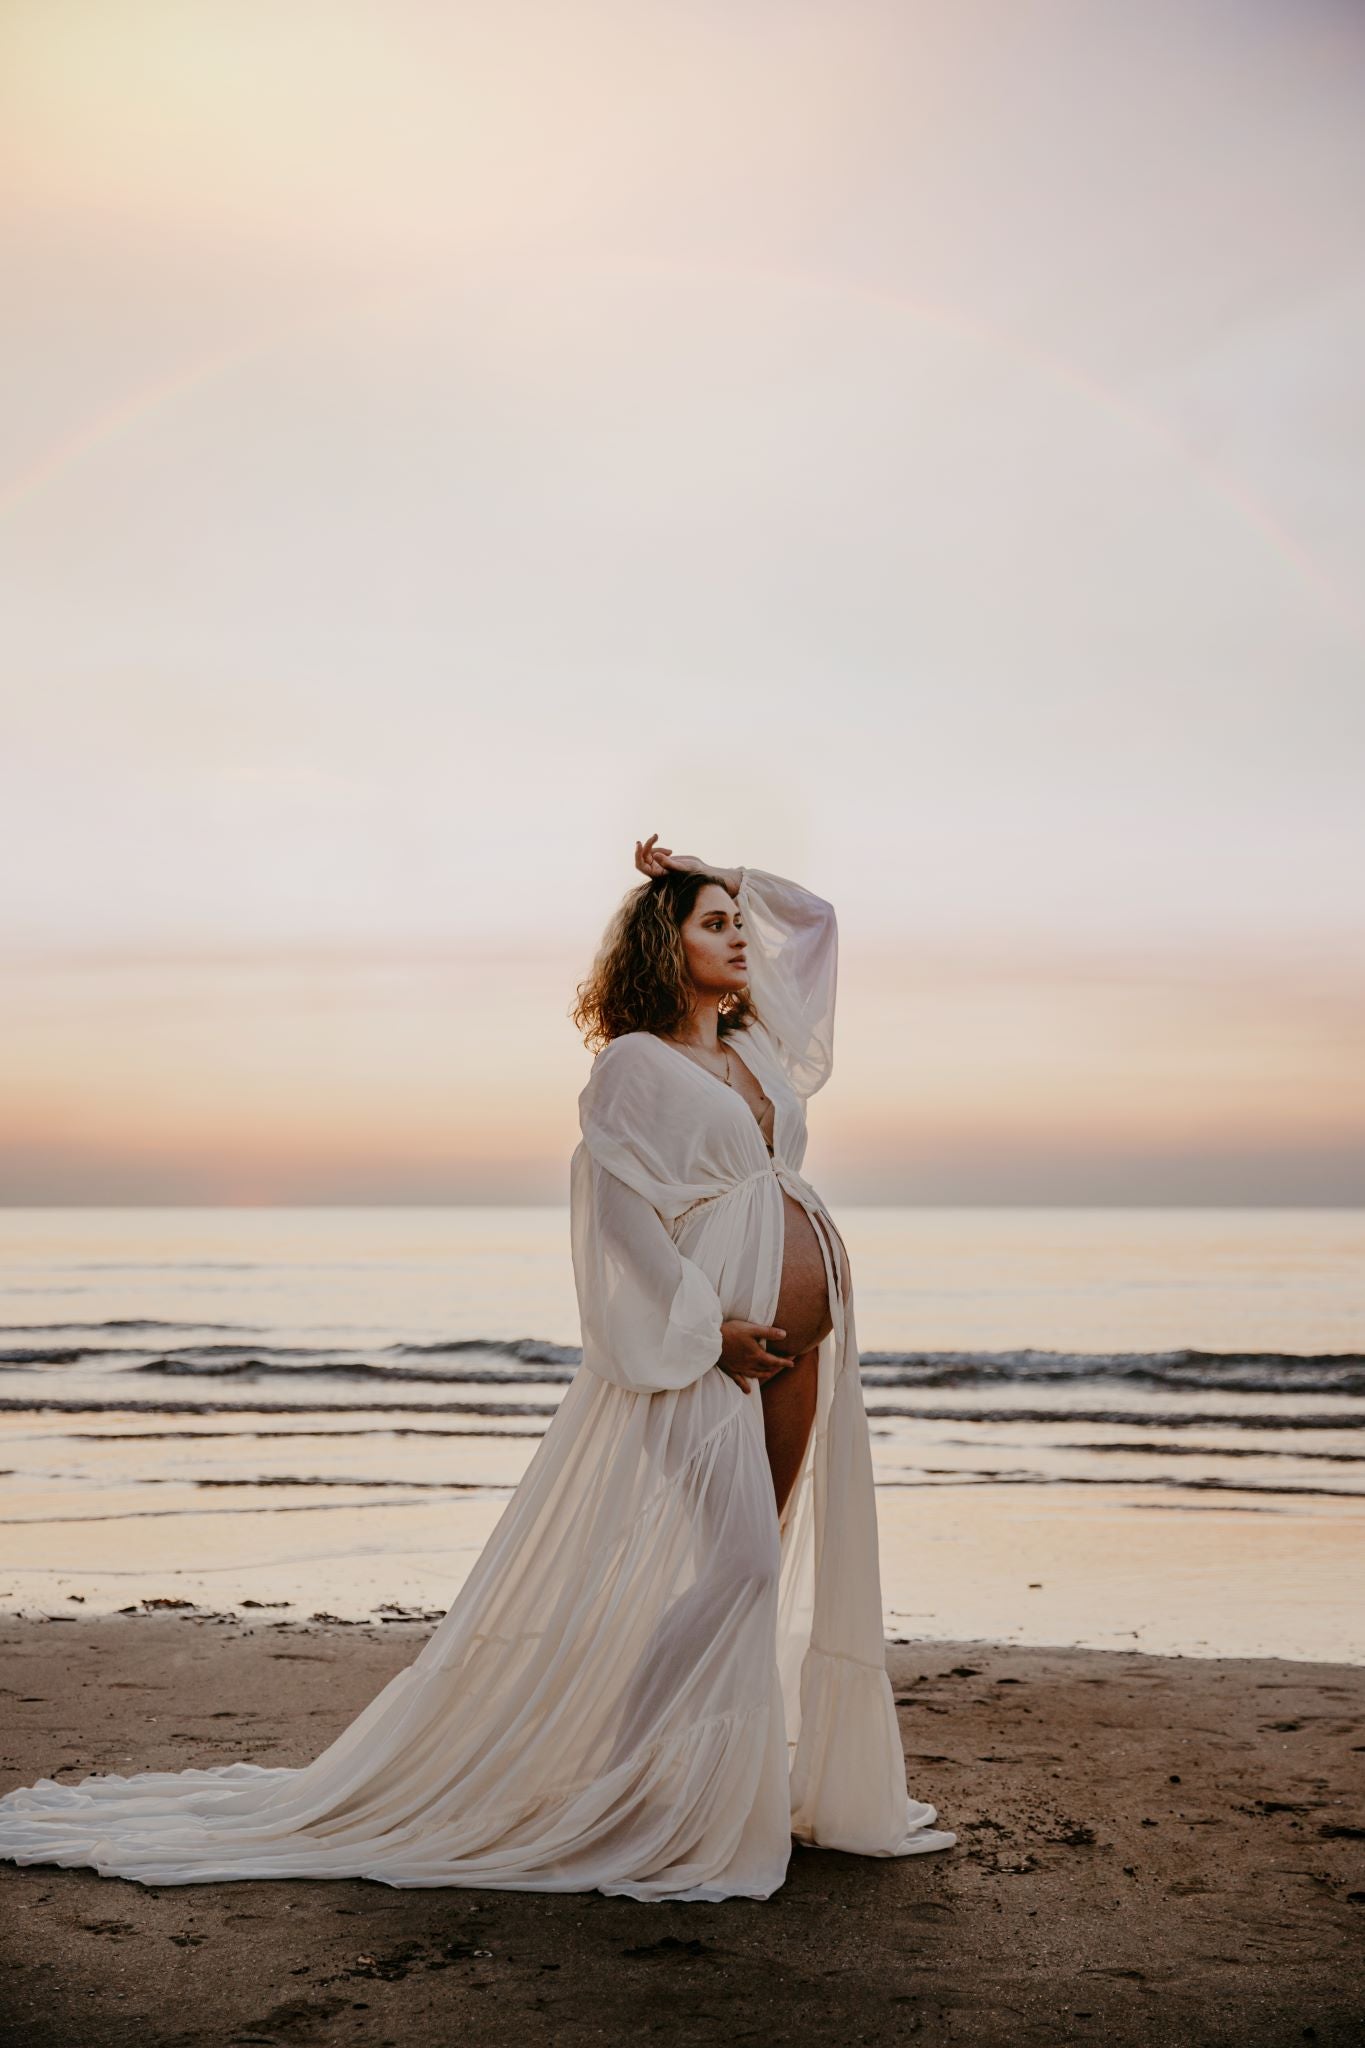 Dress Hire - Photoshoot Dresses - Vanilla Chiffon Robe/Dress - RENTAL